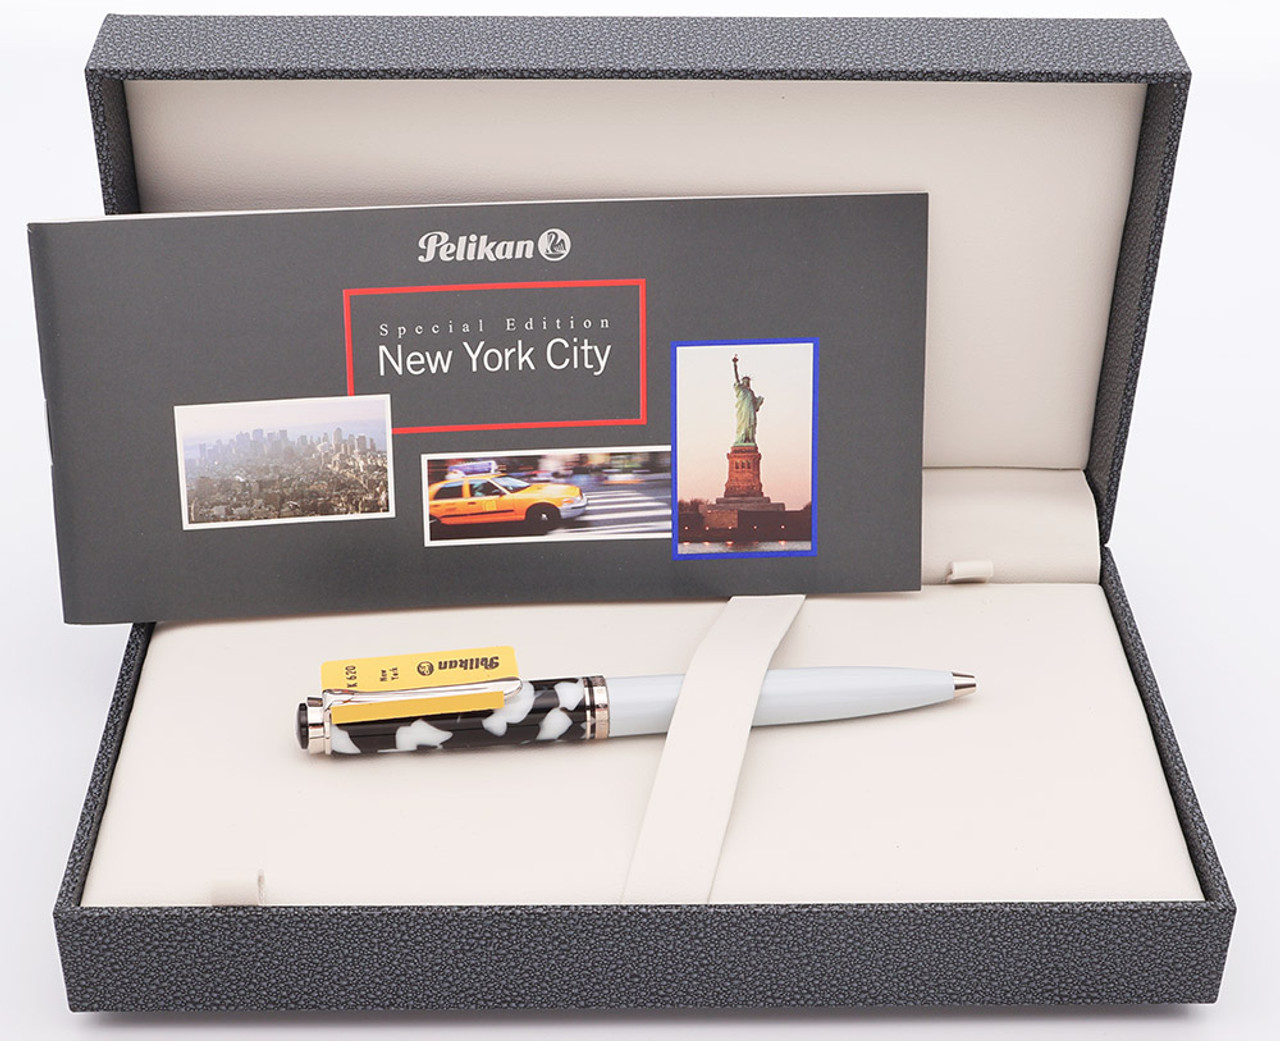 Pelikan City Series Special Edition K620 Ballpoint Pen (2004) - New York, Black & White Cap, White Barrel, Chrome Trim (Near Mint in Box, Works Well)